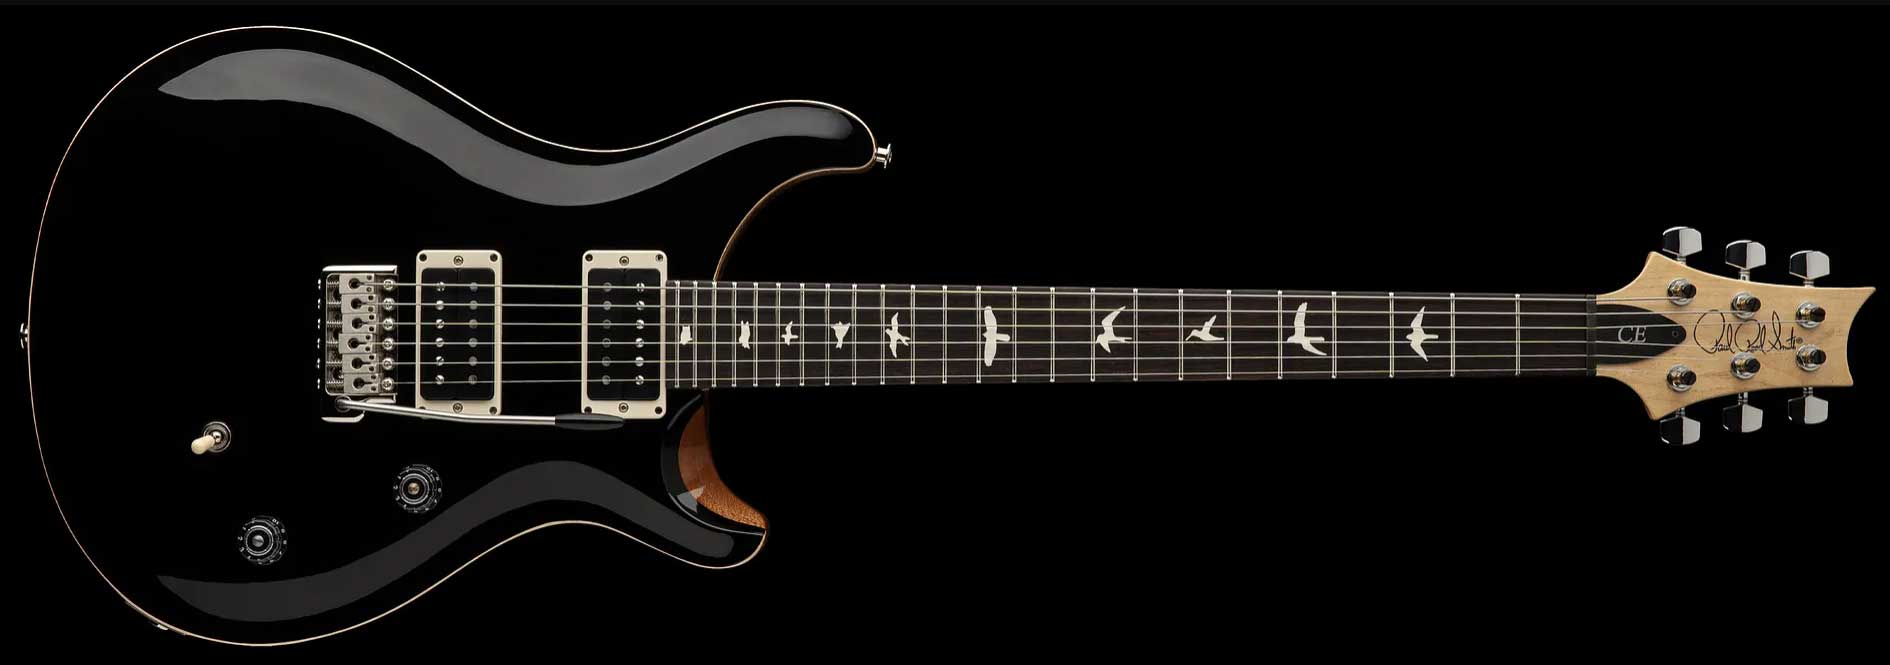 Prs Ce 24 Bolt-on Usa 2h Trem Rw - Black - Guitarra eléctrica de doble corte. - Variation 2